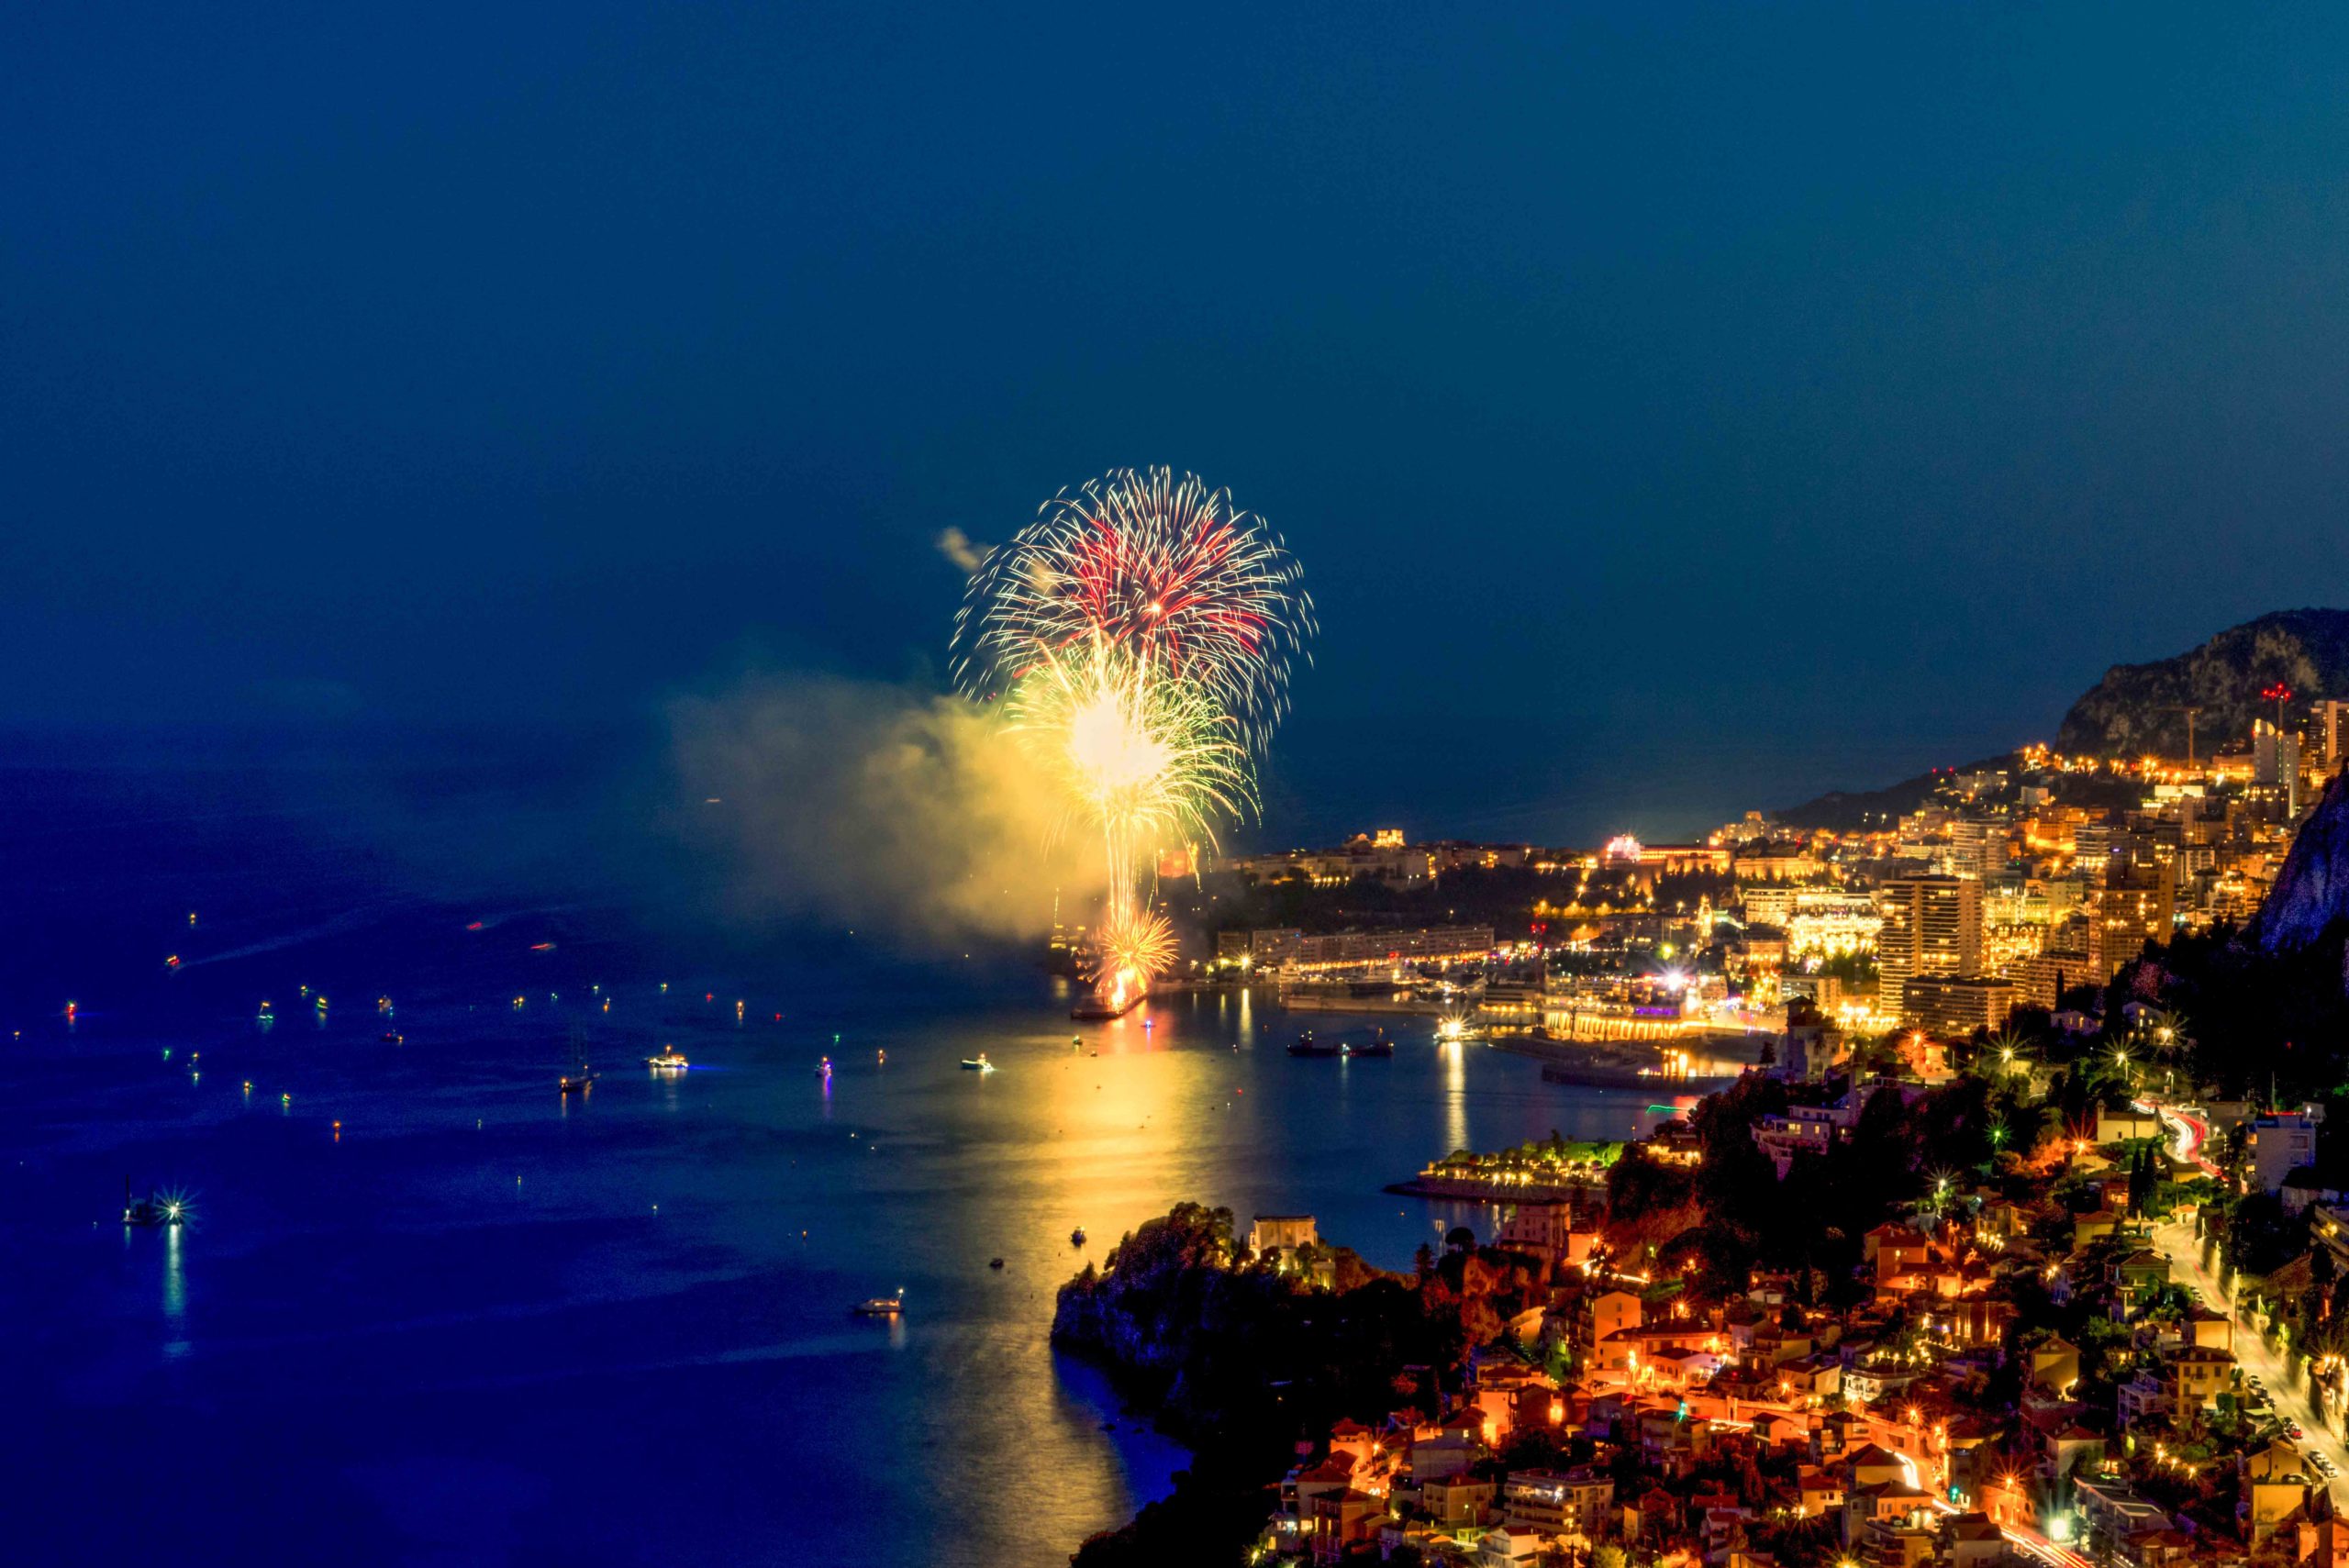 Fireworks. Photo: @sergiopazzano78 via Twenty20